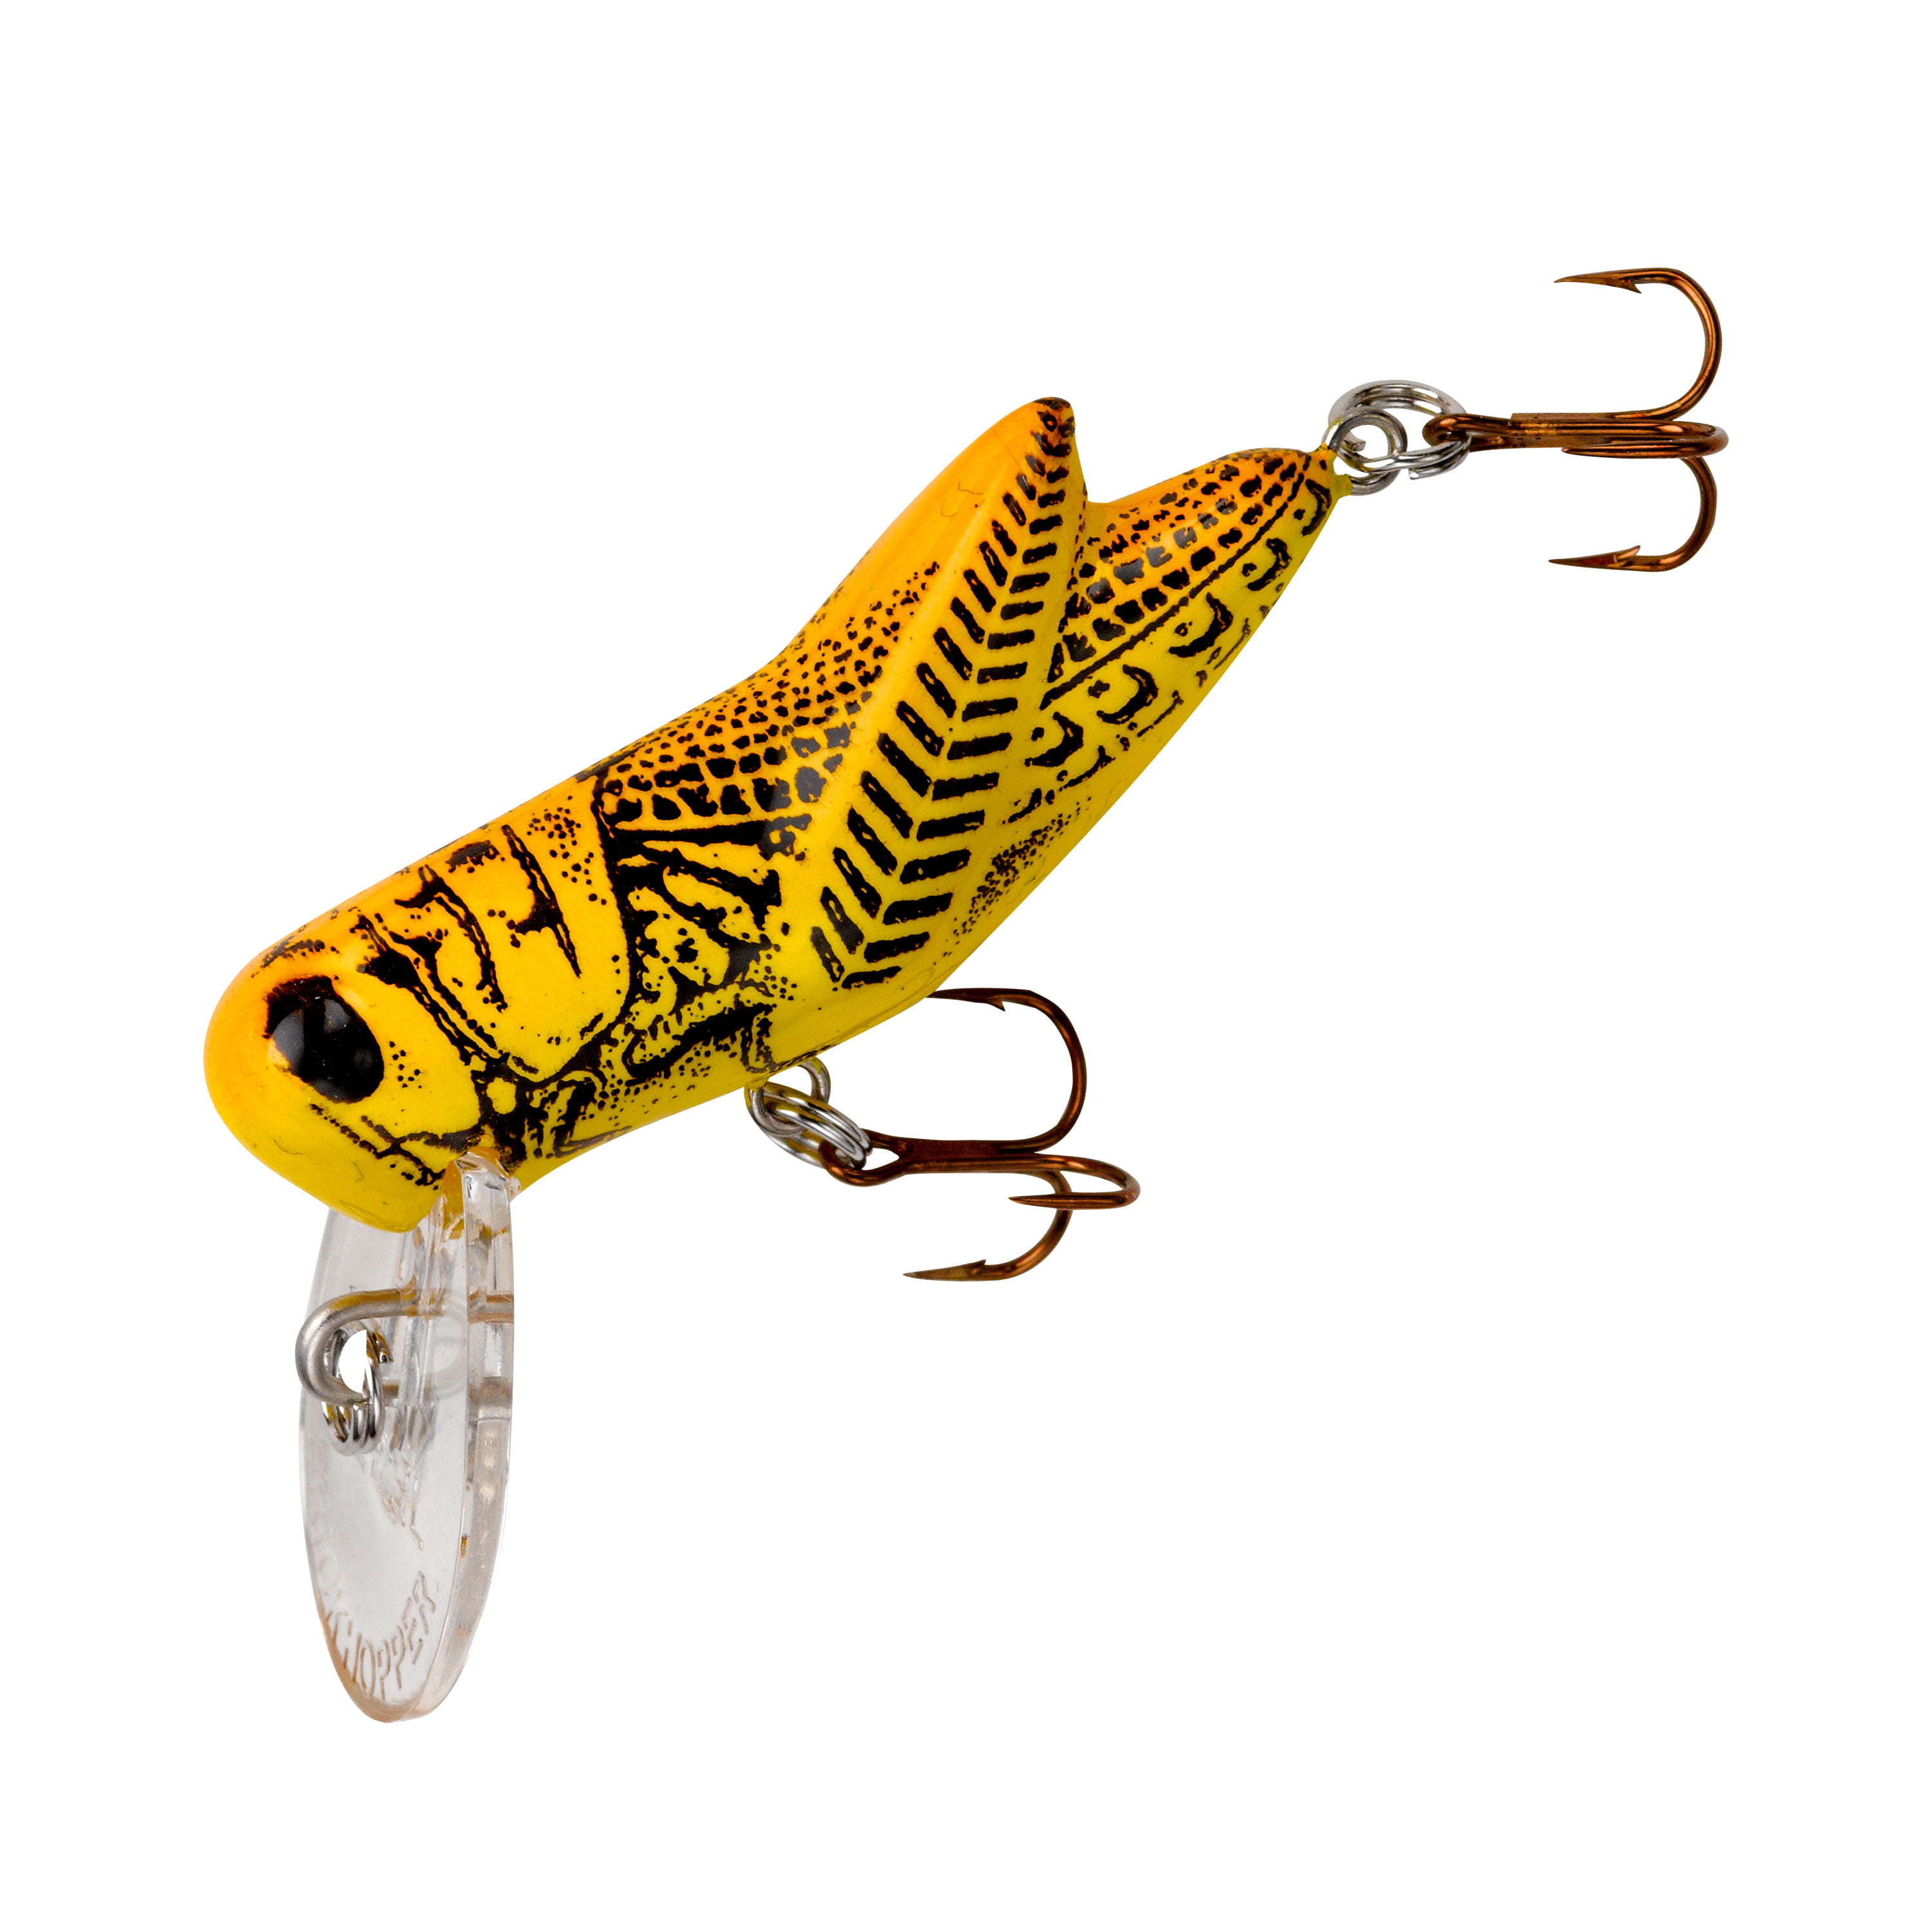 Rebel Crick hopper Fishing Lure Hard bait Yellow Grasshopper 1 1/2 In. 3/32  Oz. - Walmart.com